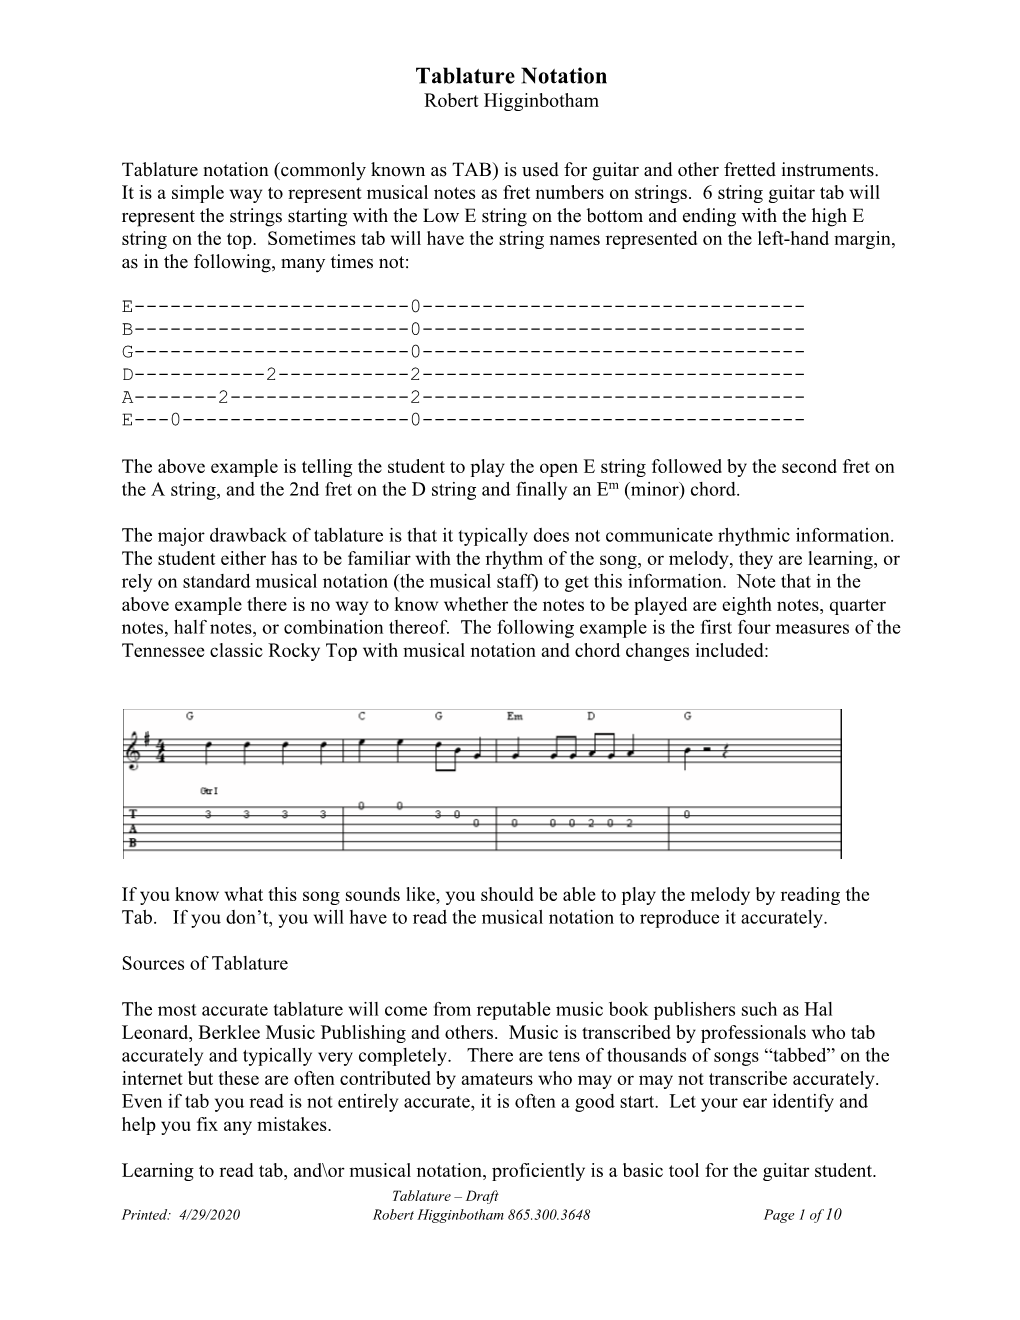 Tablature Notation Robert Higginbotham